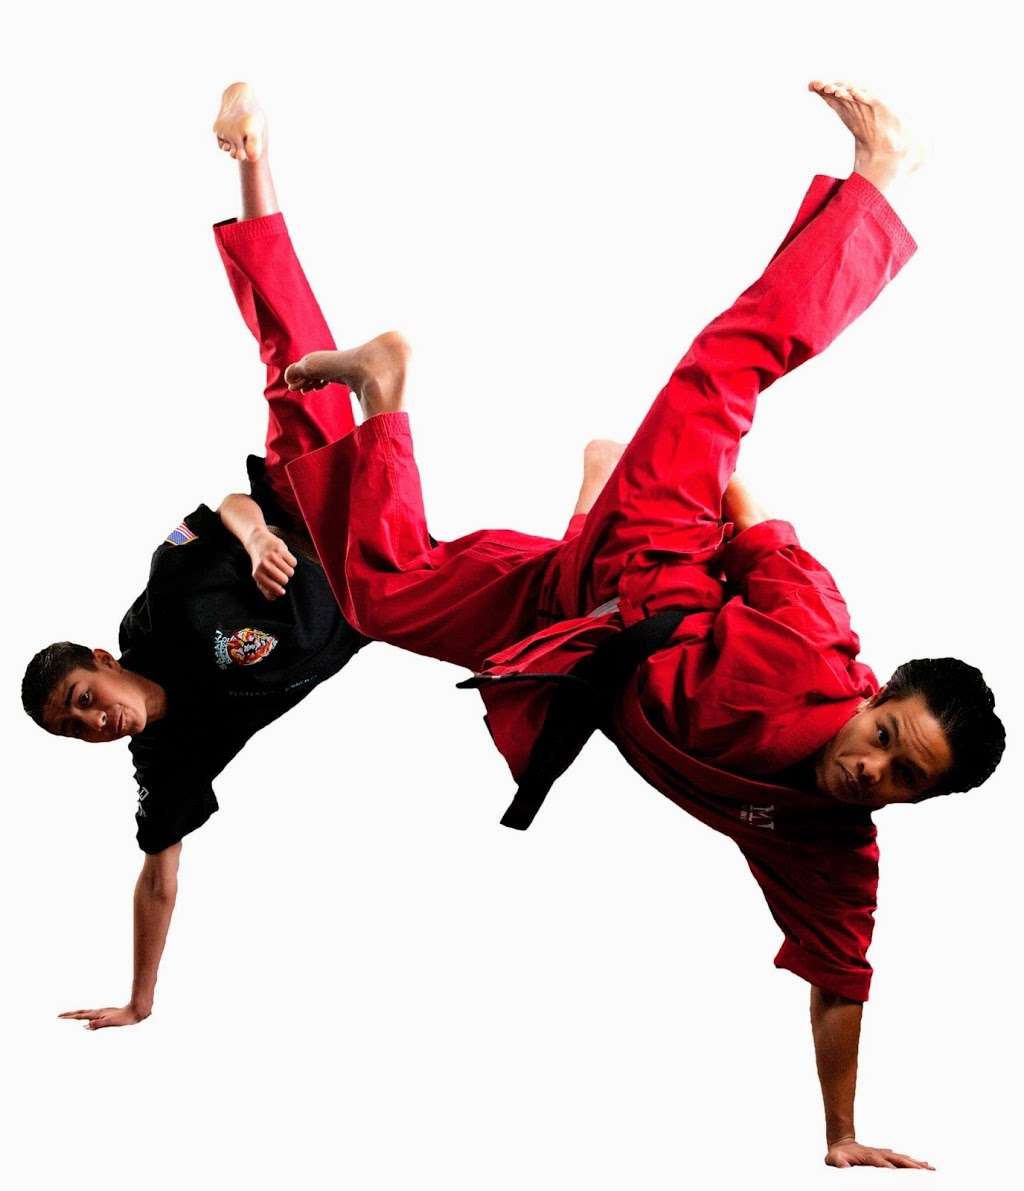 Sasakis Kenpo Karate | 3130 Paseo Mercado #108, Oxnard, CA 93036 | Phone: (805) 981-4333